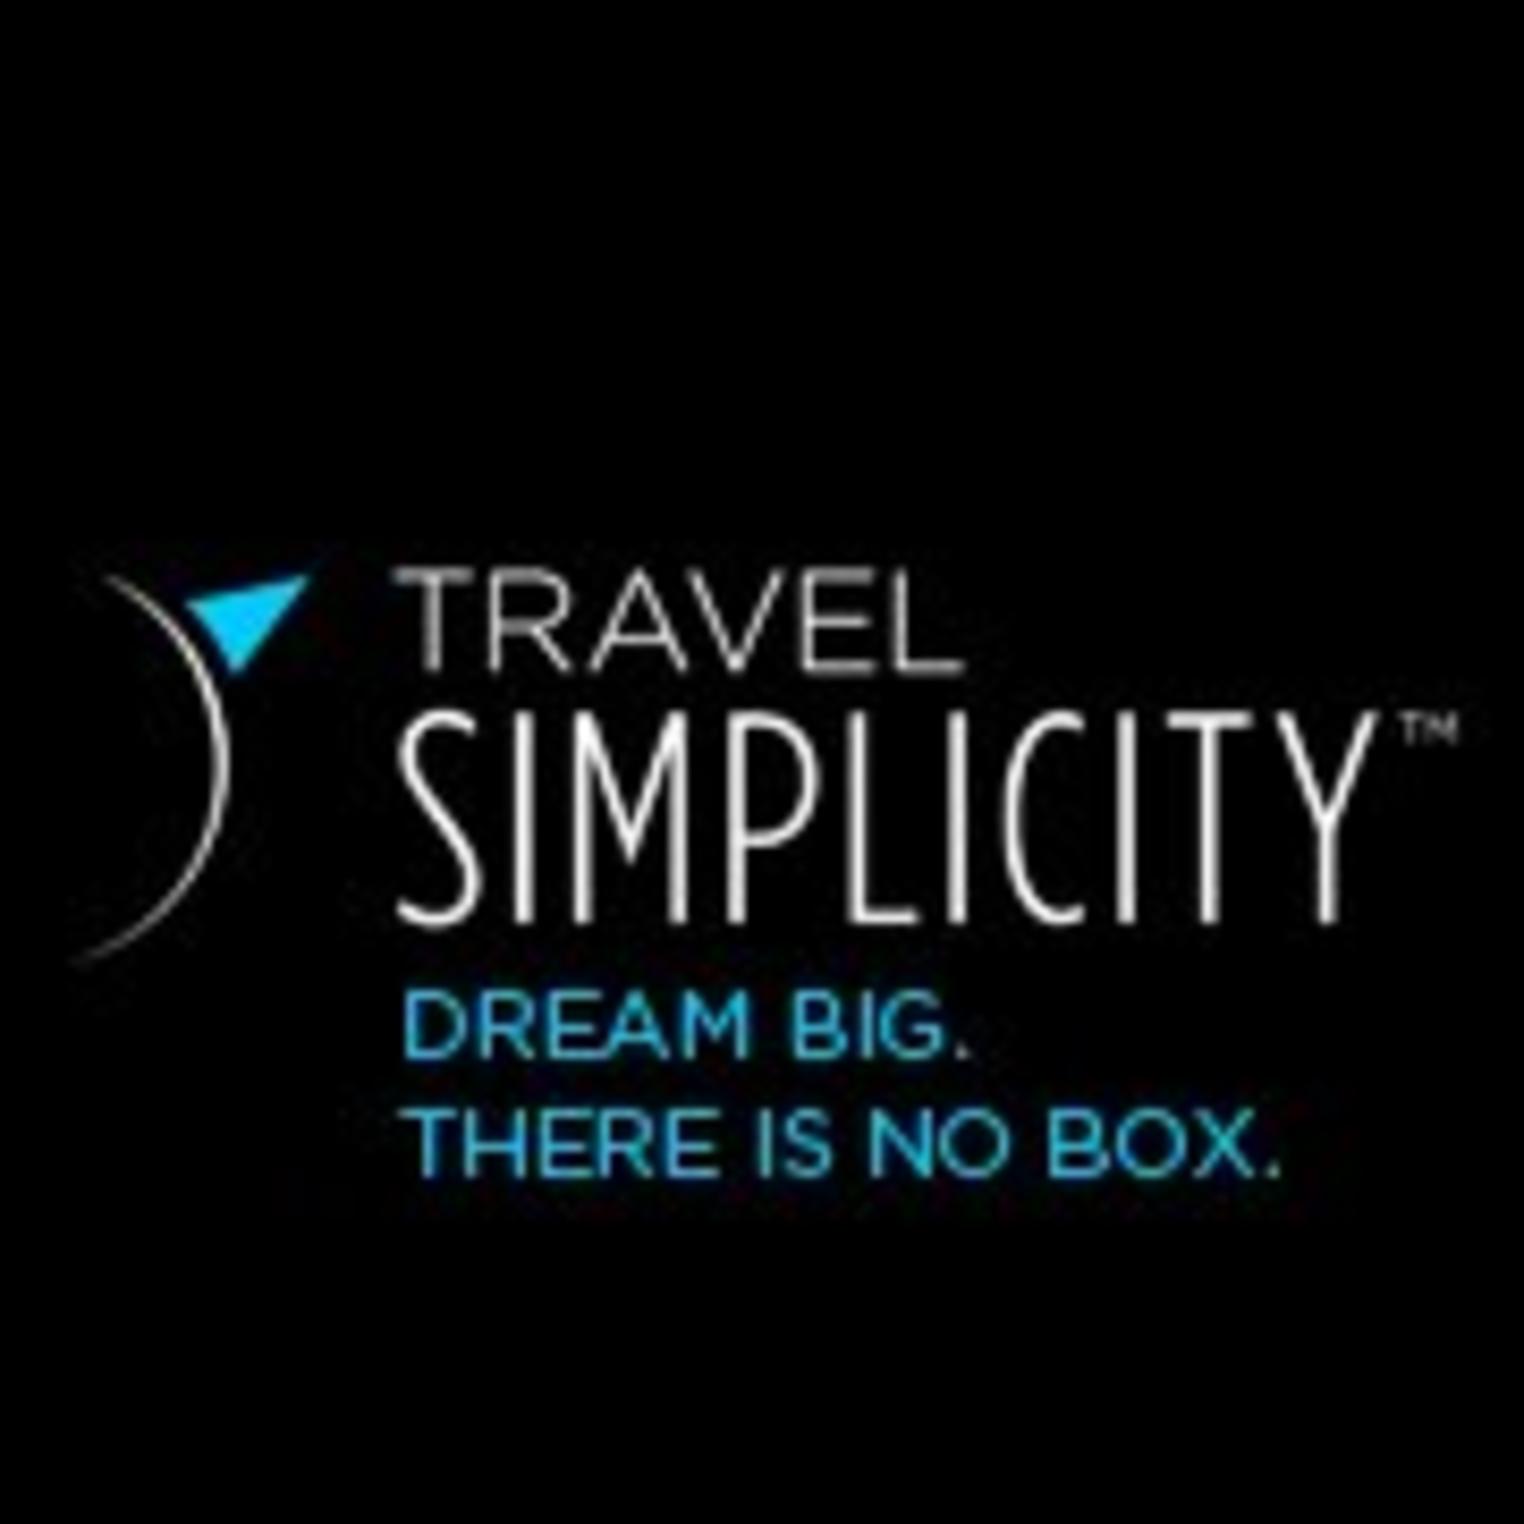 Travel Simplicity